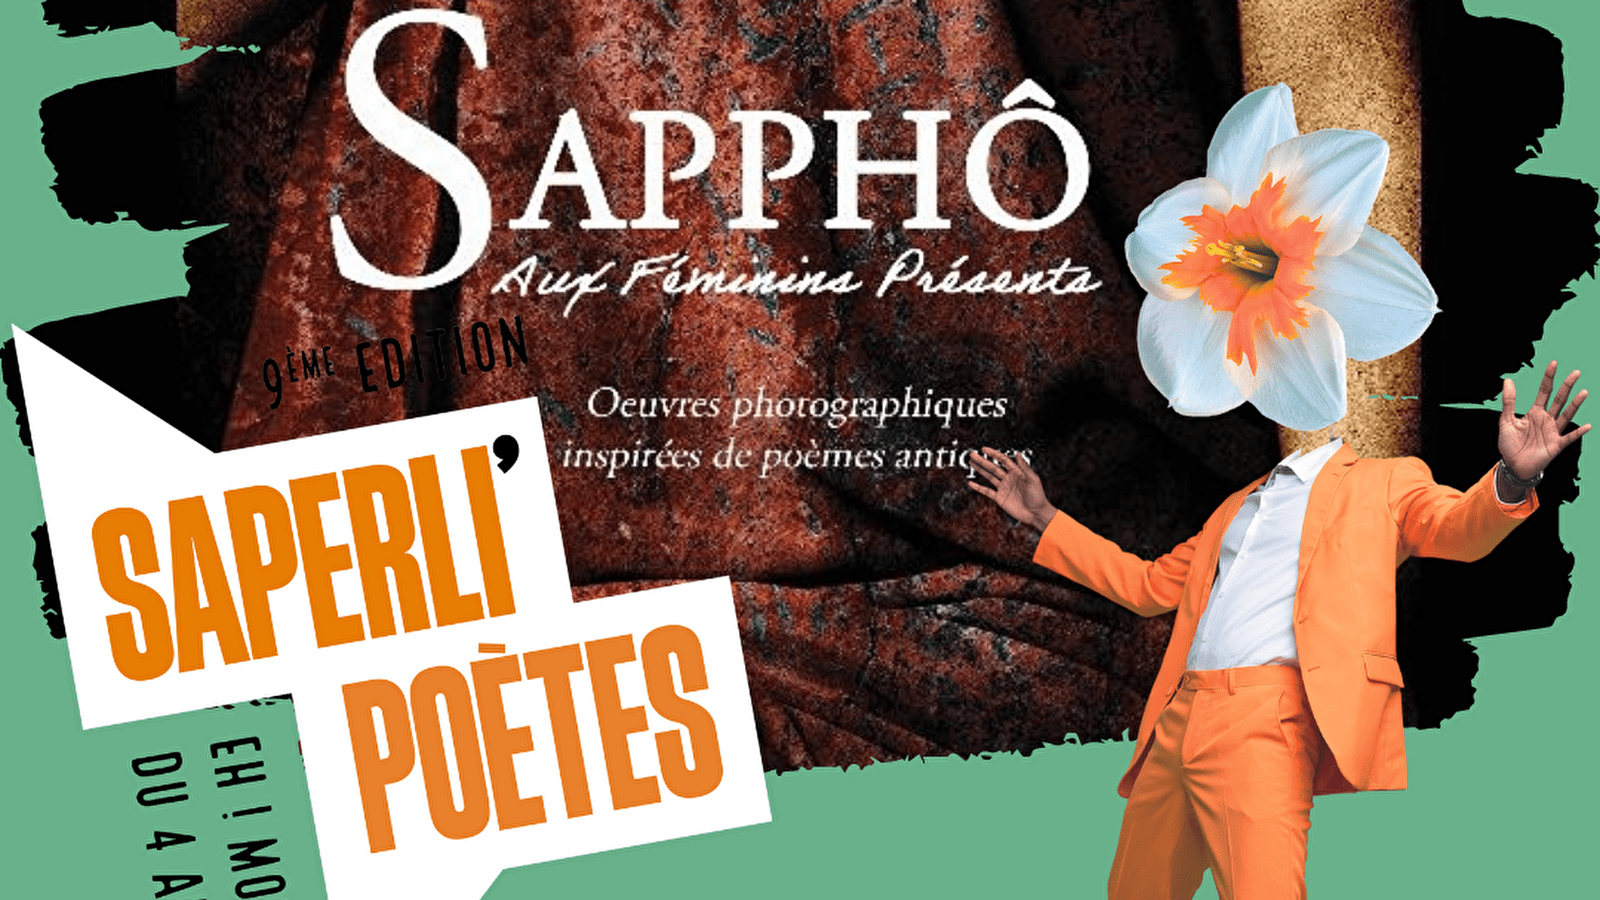 Saperli'poètes - Ausstellung Sapphô, aux féminins présent